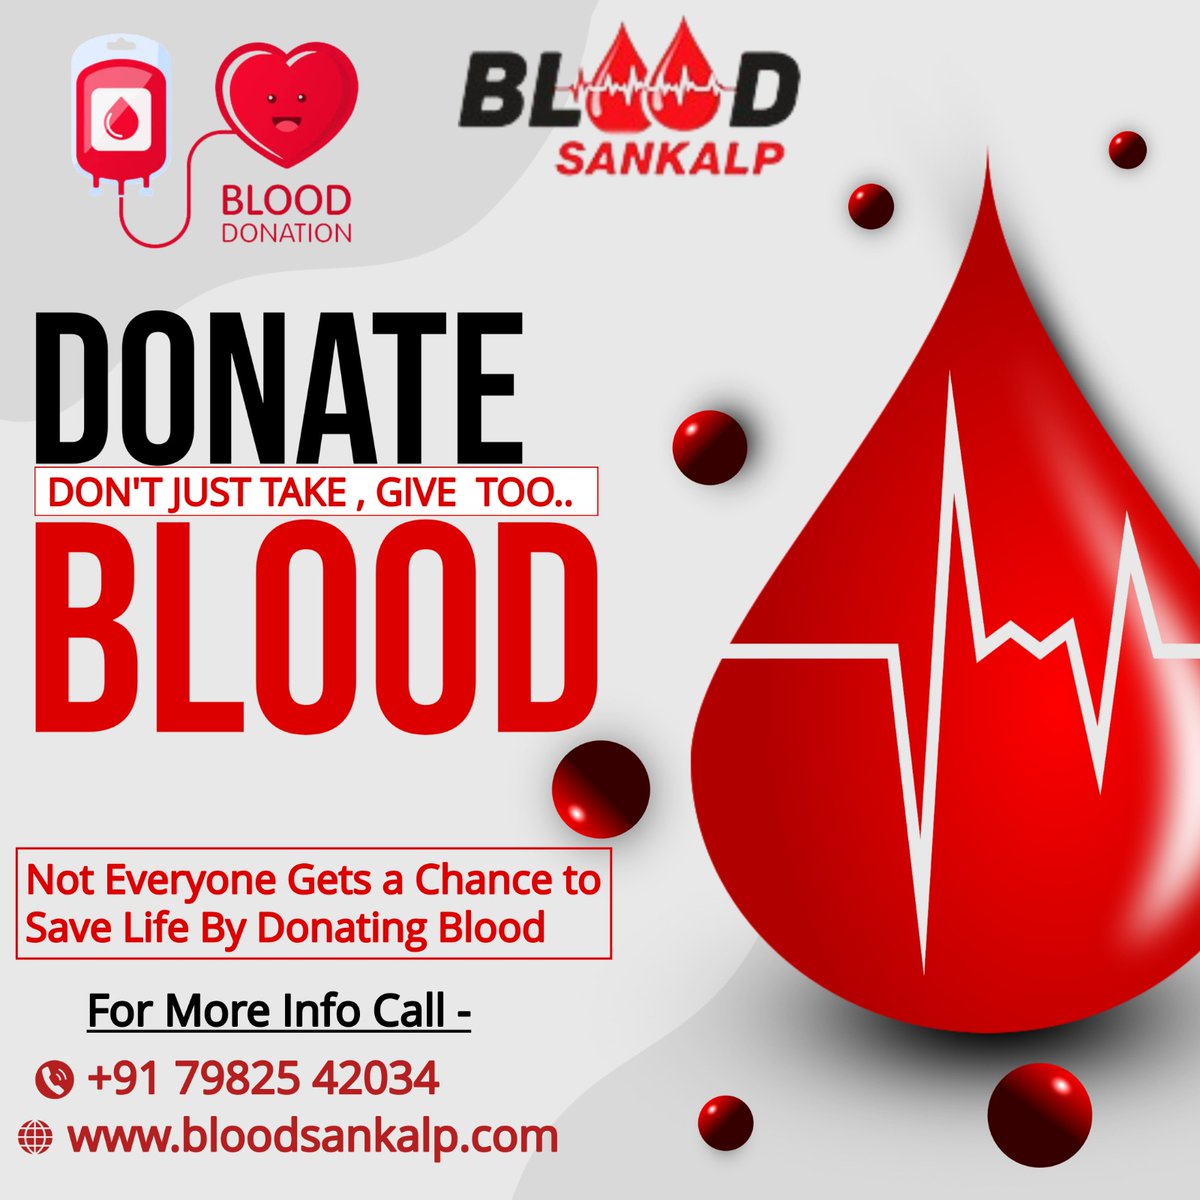 Donate blood, save lives – your contribution matters
--------------------------
#donationblood #blooddonationhero #blooddonationchallenge #blooddonationcamps #blooddonation💉 #blooddonationsaveslives #wholeblooddonation #blooddonationawareness #blooddonationindia